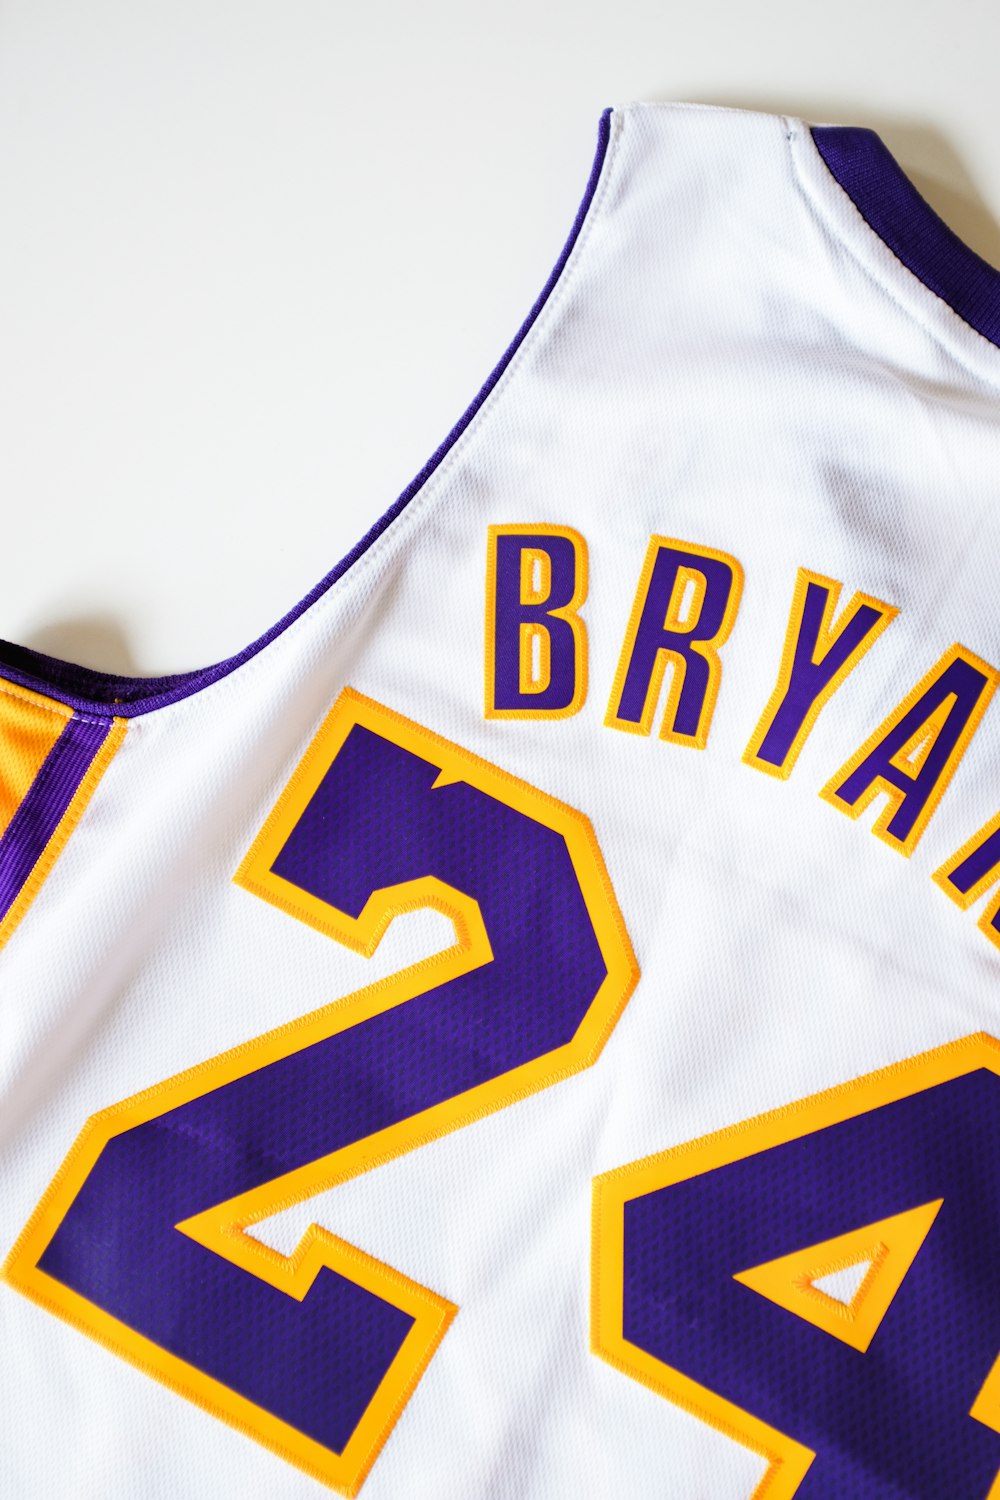 Kobe Bryant, Lakers NBA jersey #24 photo – Free Los angeles lakers